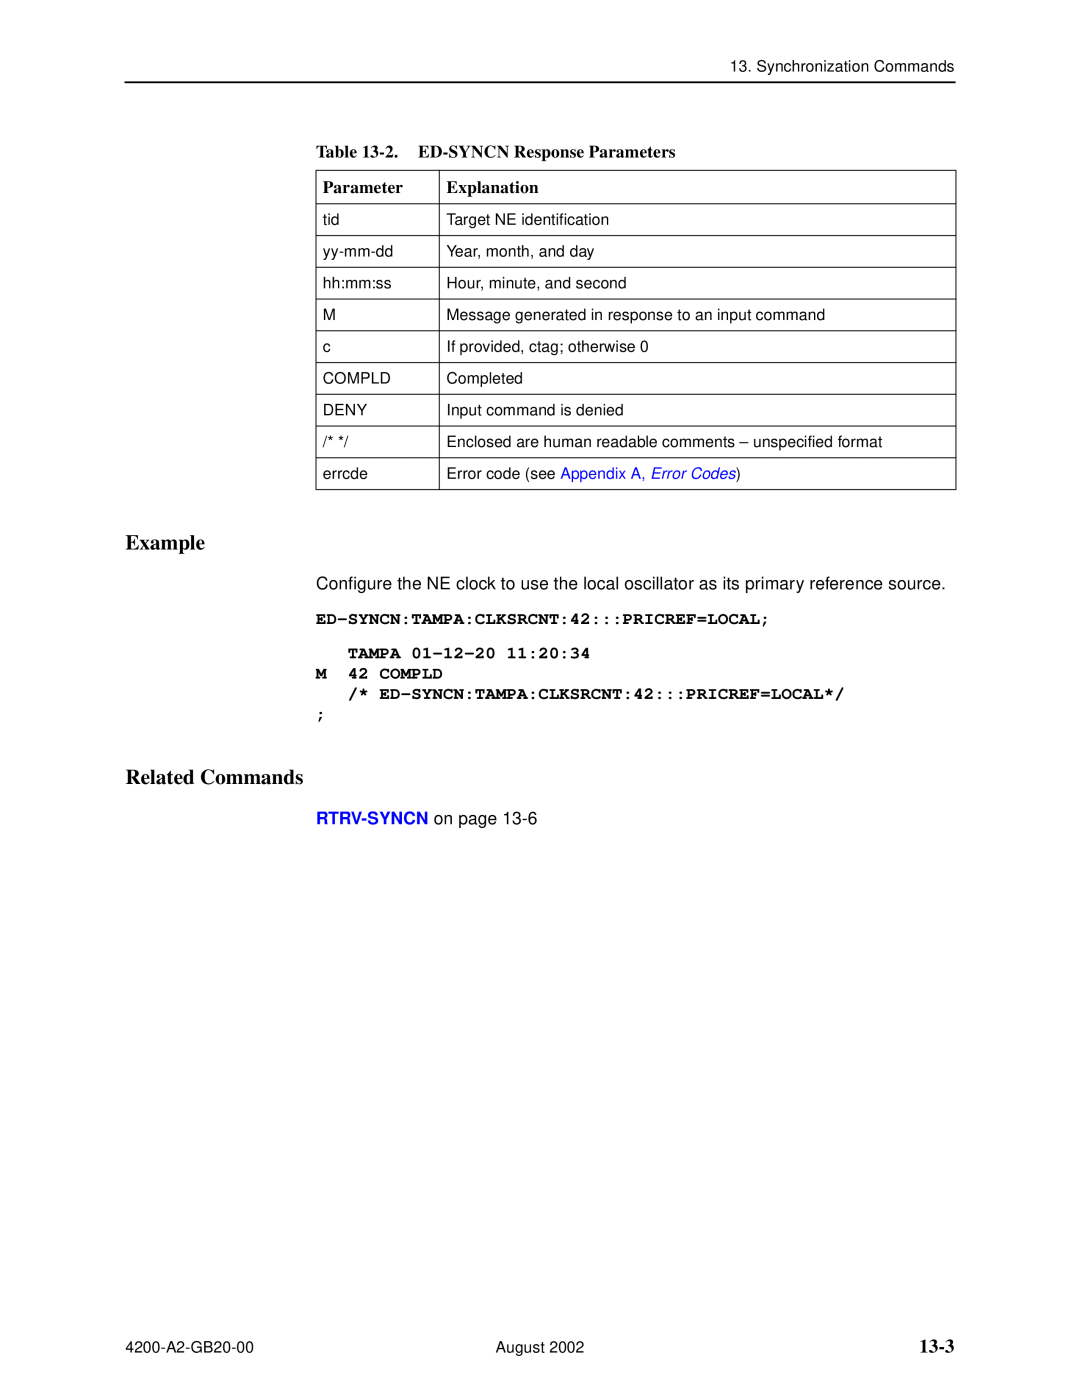 Paradyne 4200 manual 13-3, 2. ED-SYNCN Response Parameters, ED-SYNCNTAMPACLKSRCNT42PRICREF=LOCAL TAMPA 01-12-20 M 42 COMPLD 